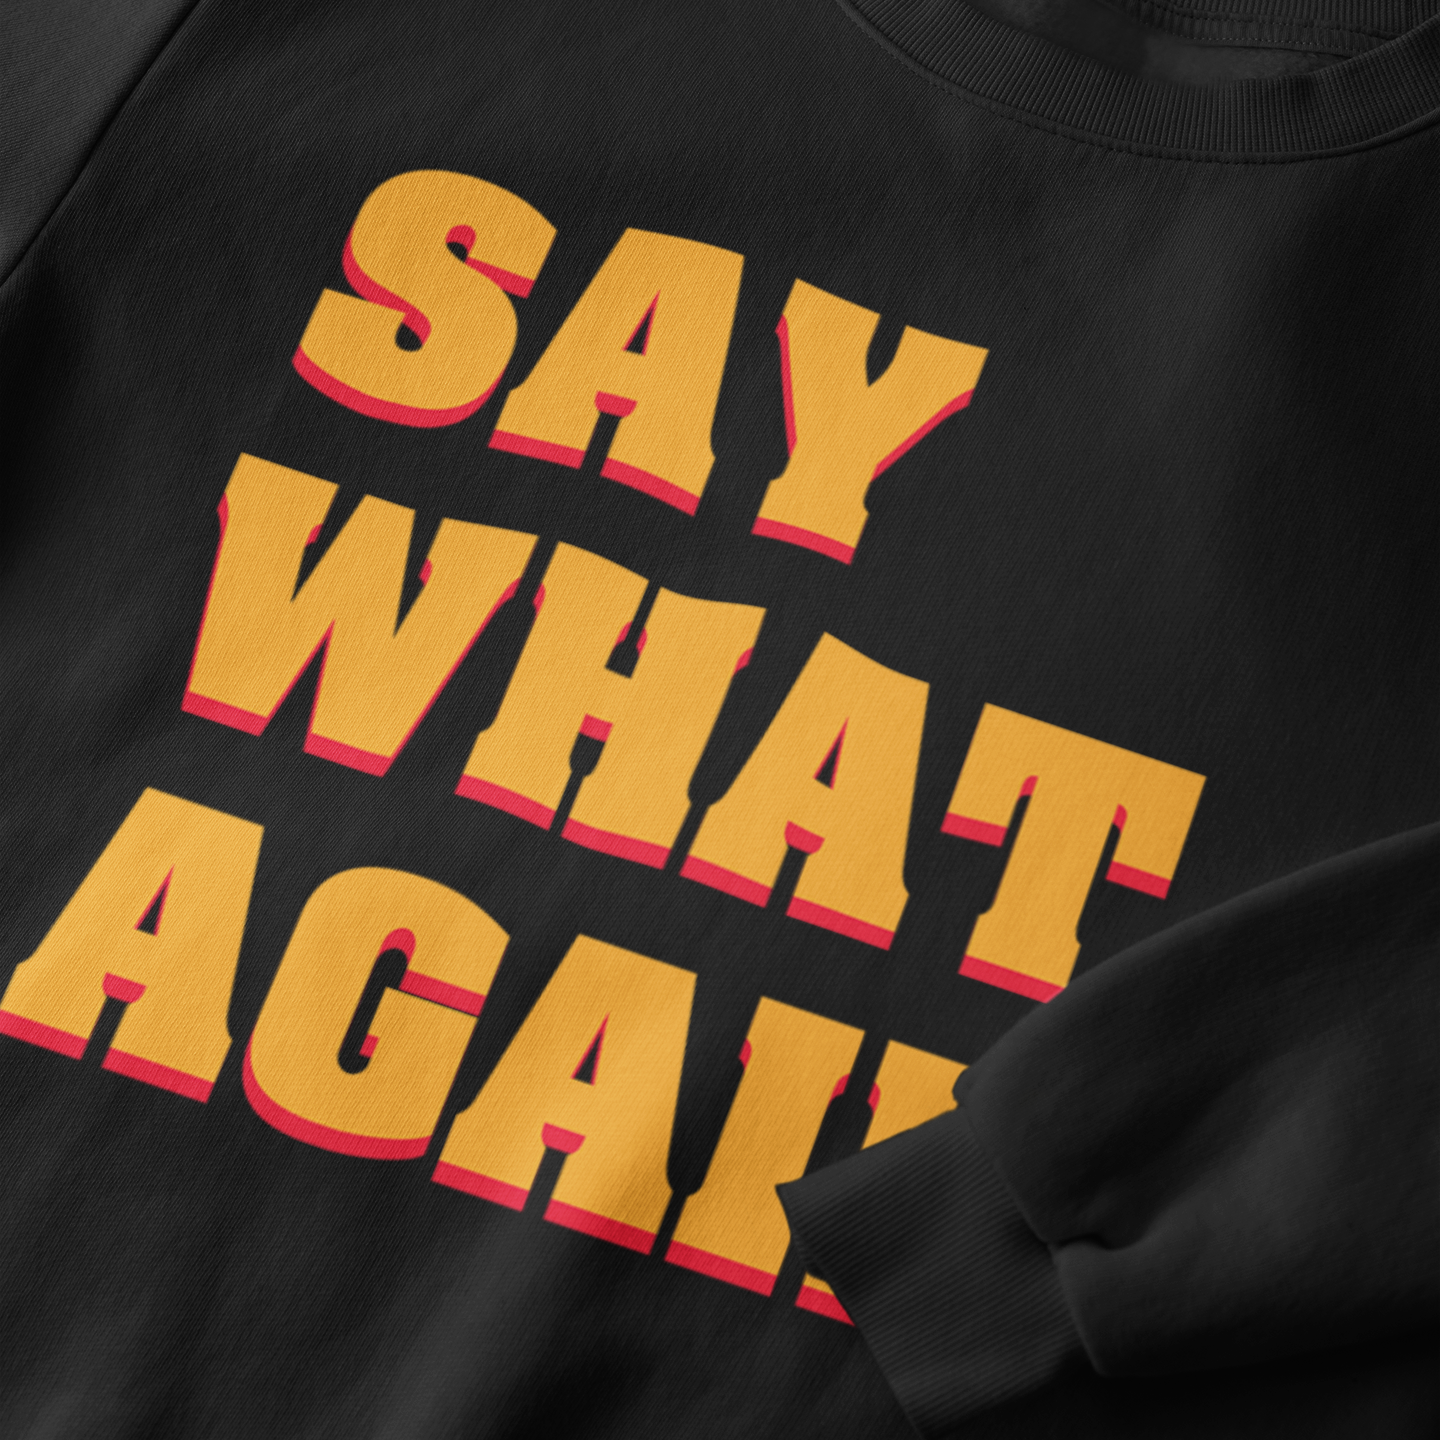 Say What Again Pulp Fiction - Sweatshirt